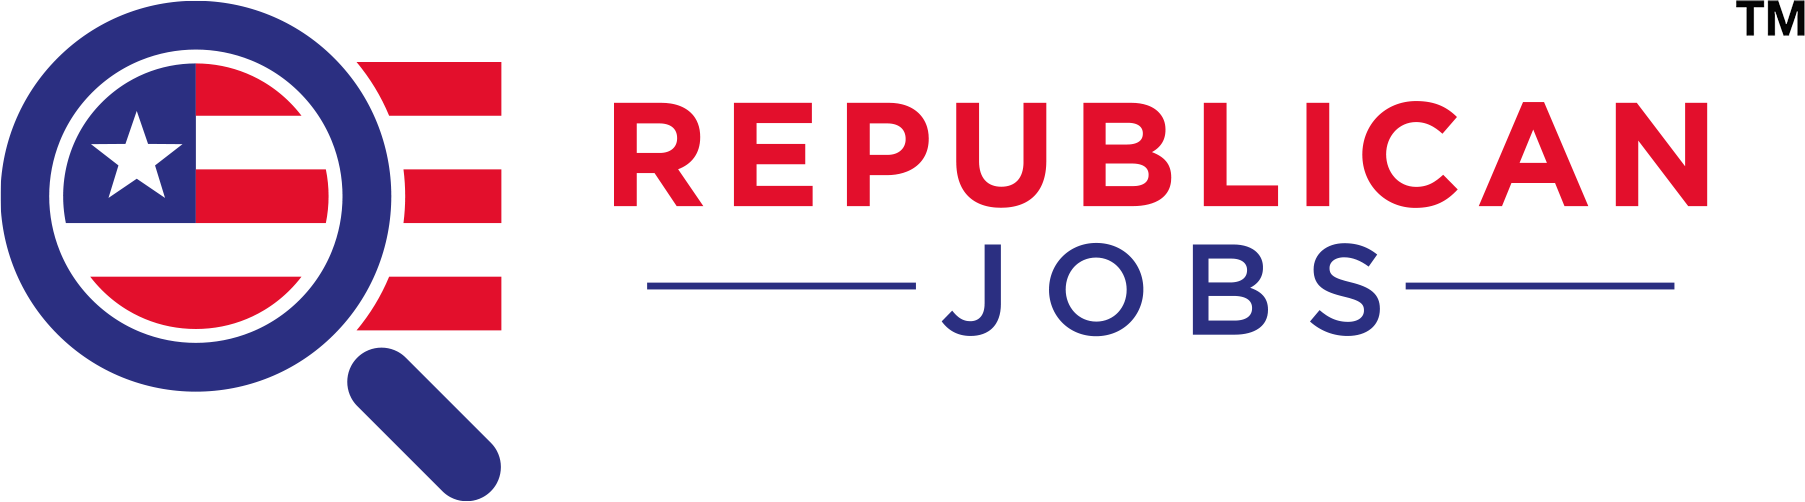 Republican jobs in Lehigh Acres Florida jobs